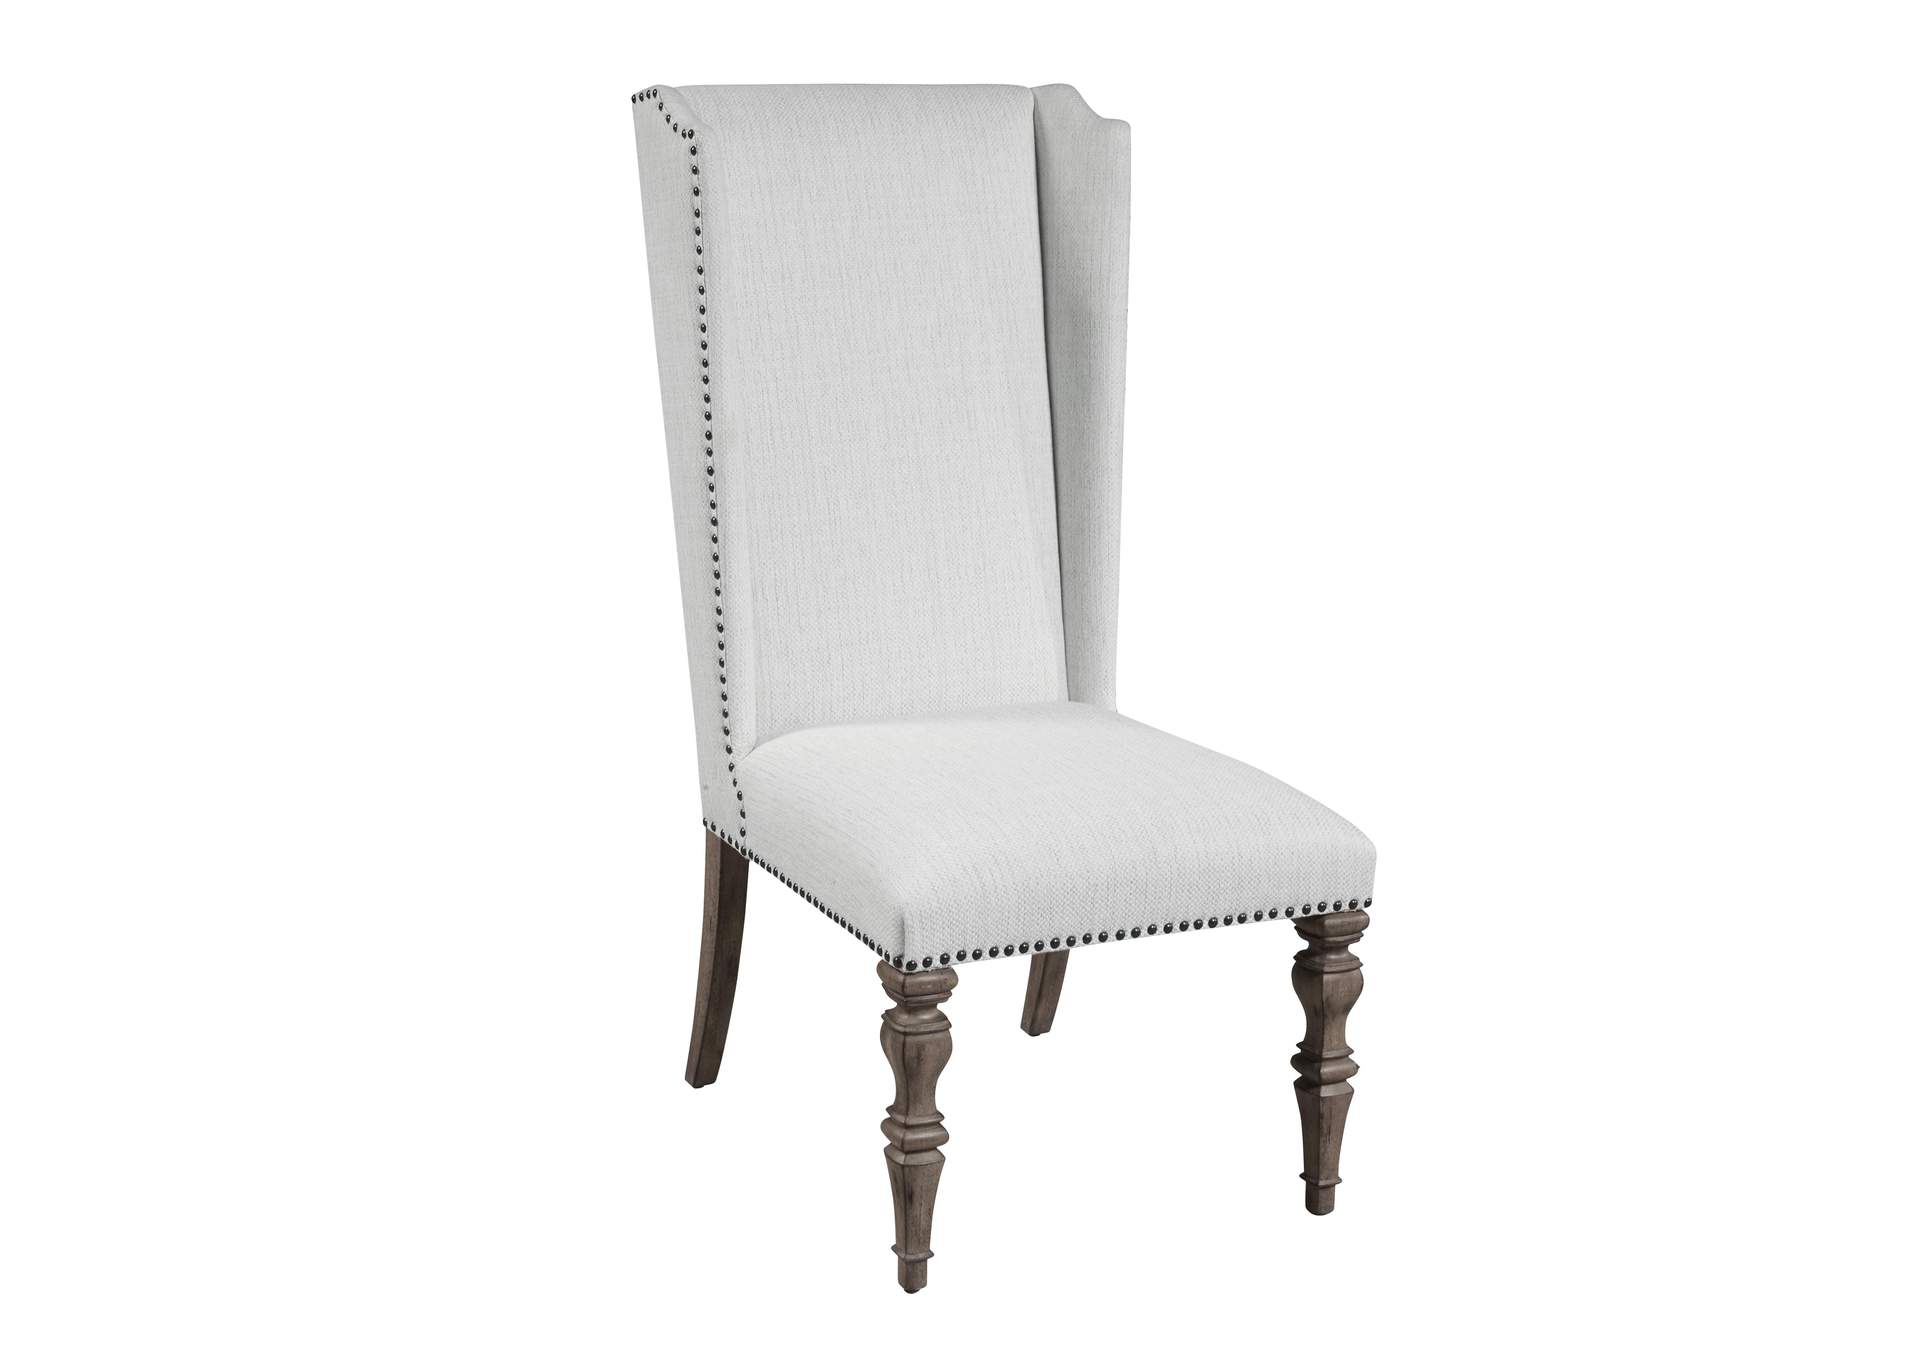 Garrison Cove Upholstered Wing Back Chair (2 Pack),Pulaski Furniture